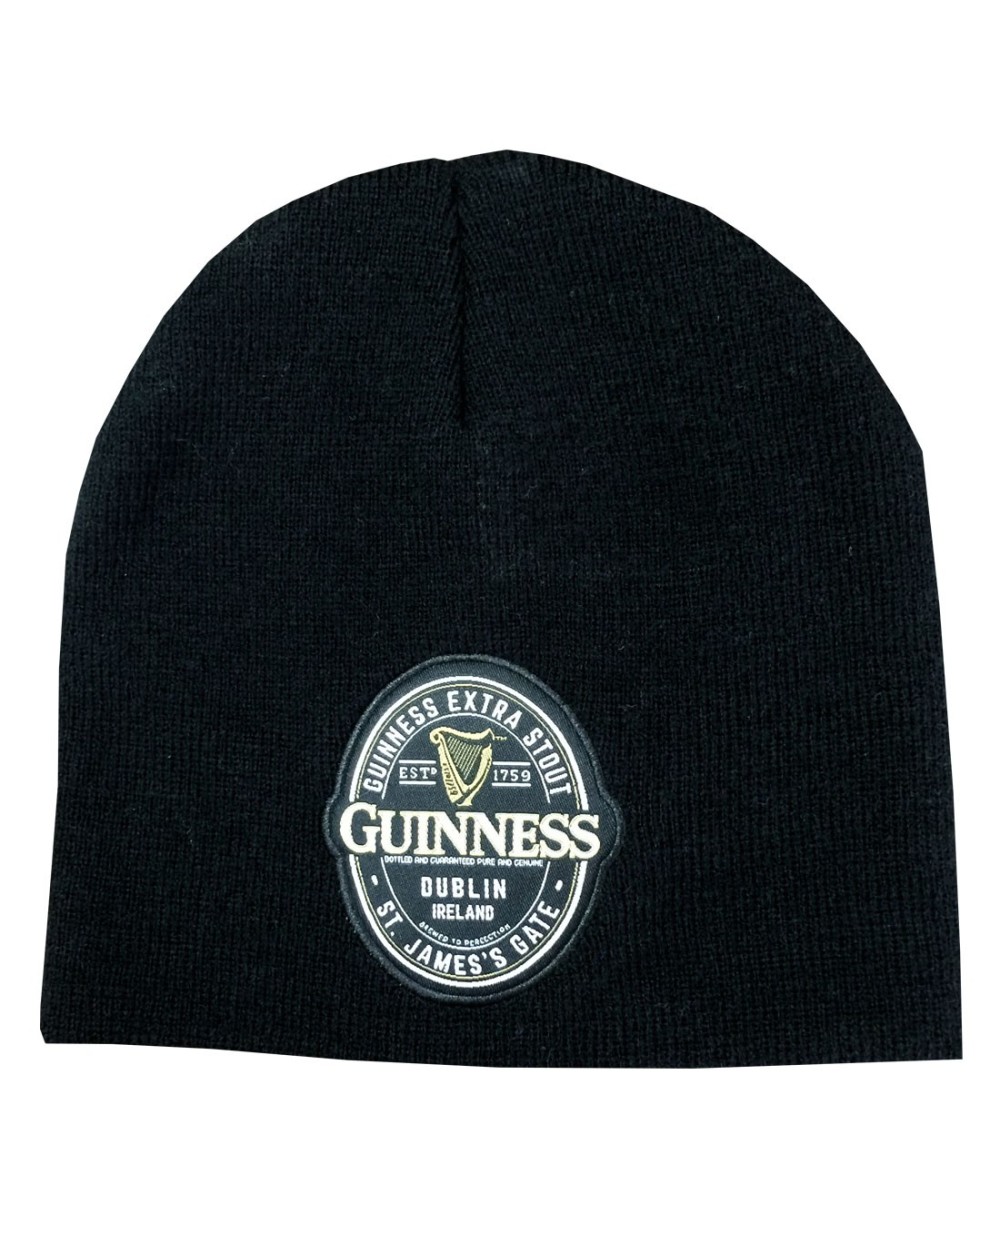 Guinness Black Woven Label Knit Hat